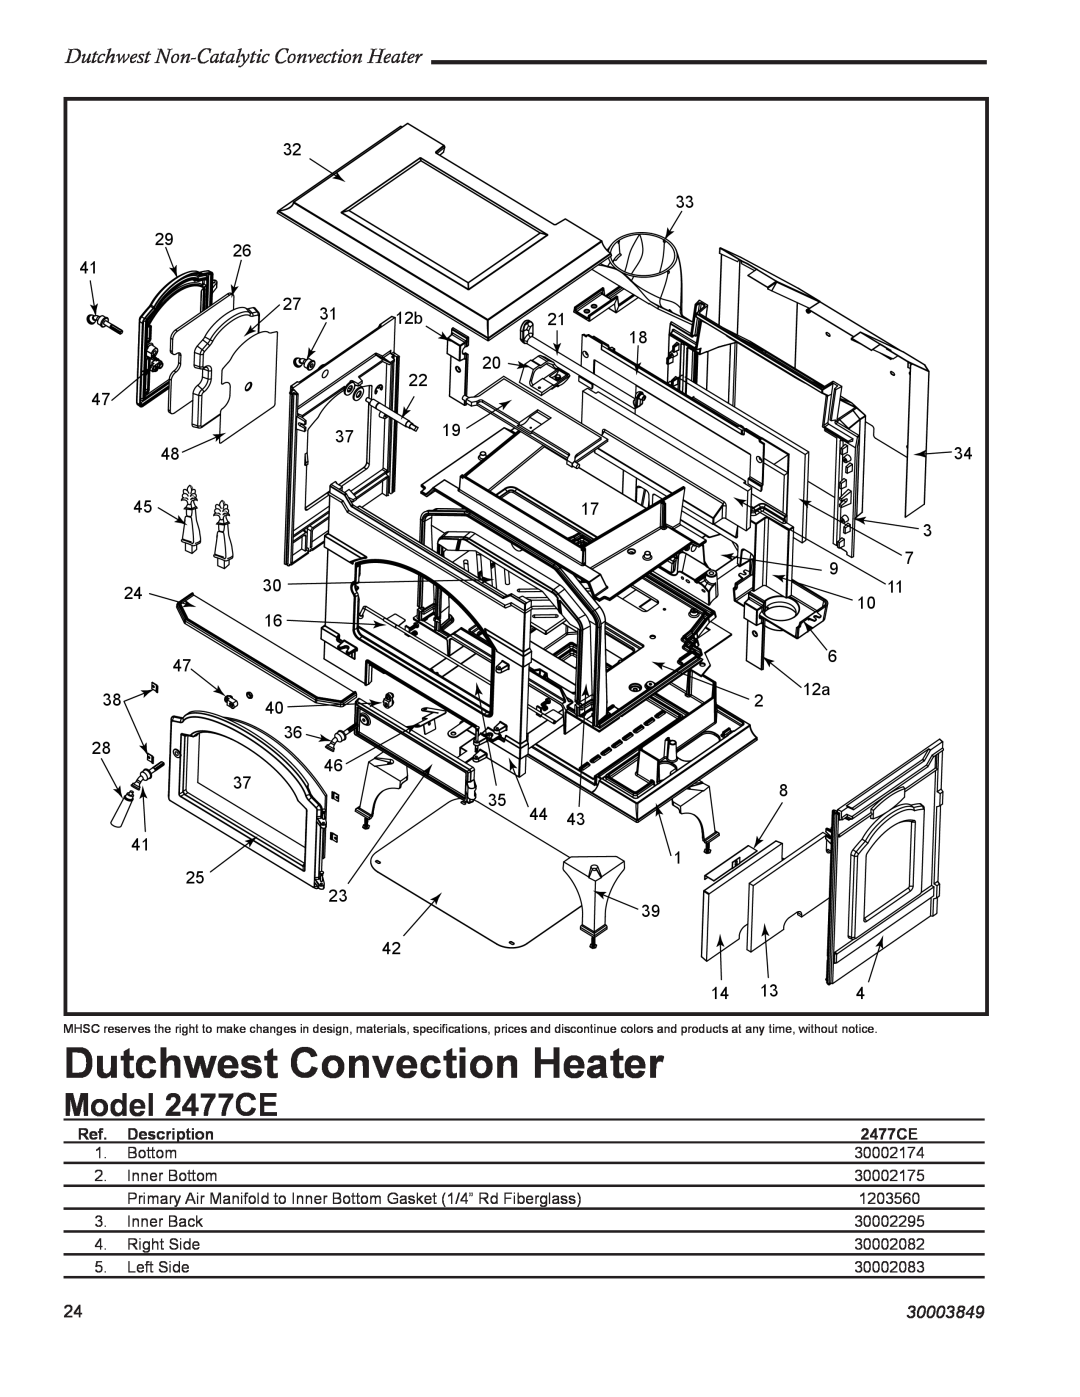 Vermont Casting manual Dutchwest Convection Heater, Model 2477CE, Dutchwest Non-CatalyticConvection Heater, 30003849 